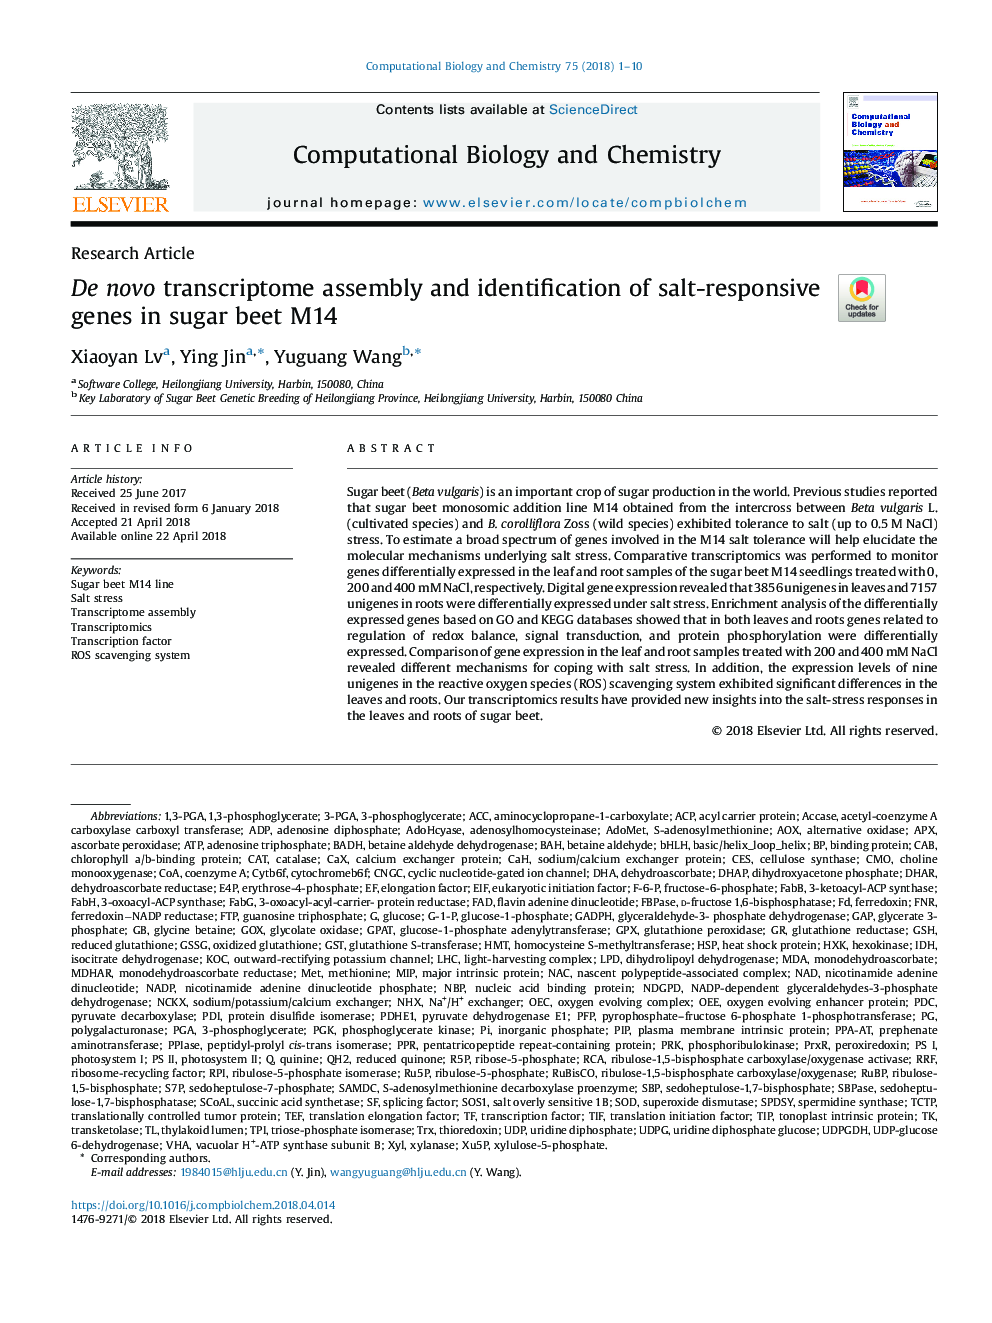 De novo transcriptome assembly and identification of salt-responsive genes in sugar beet M14